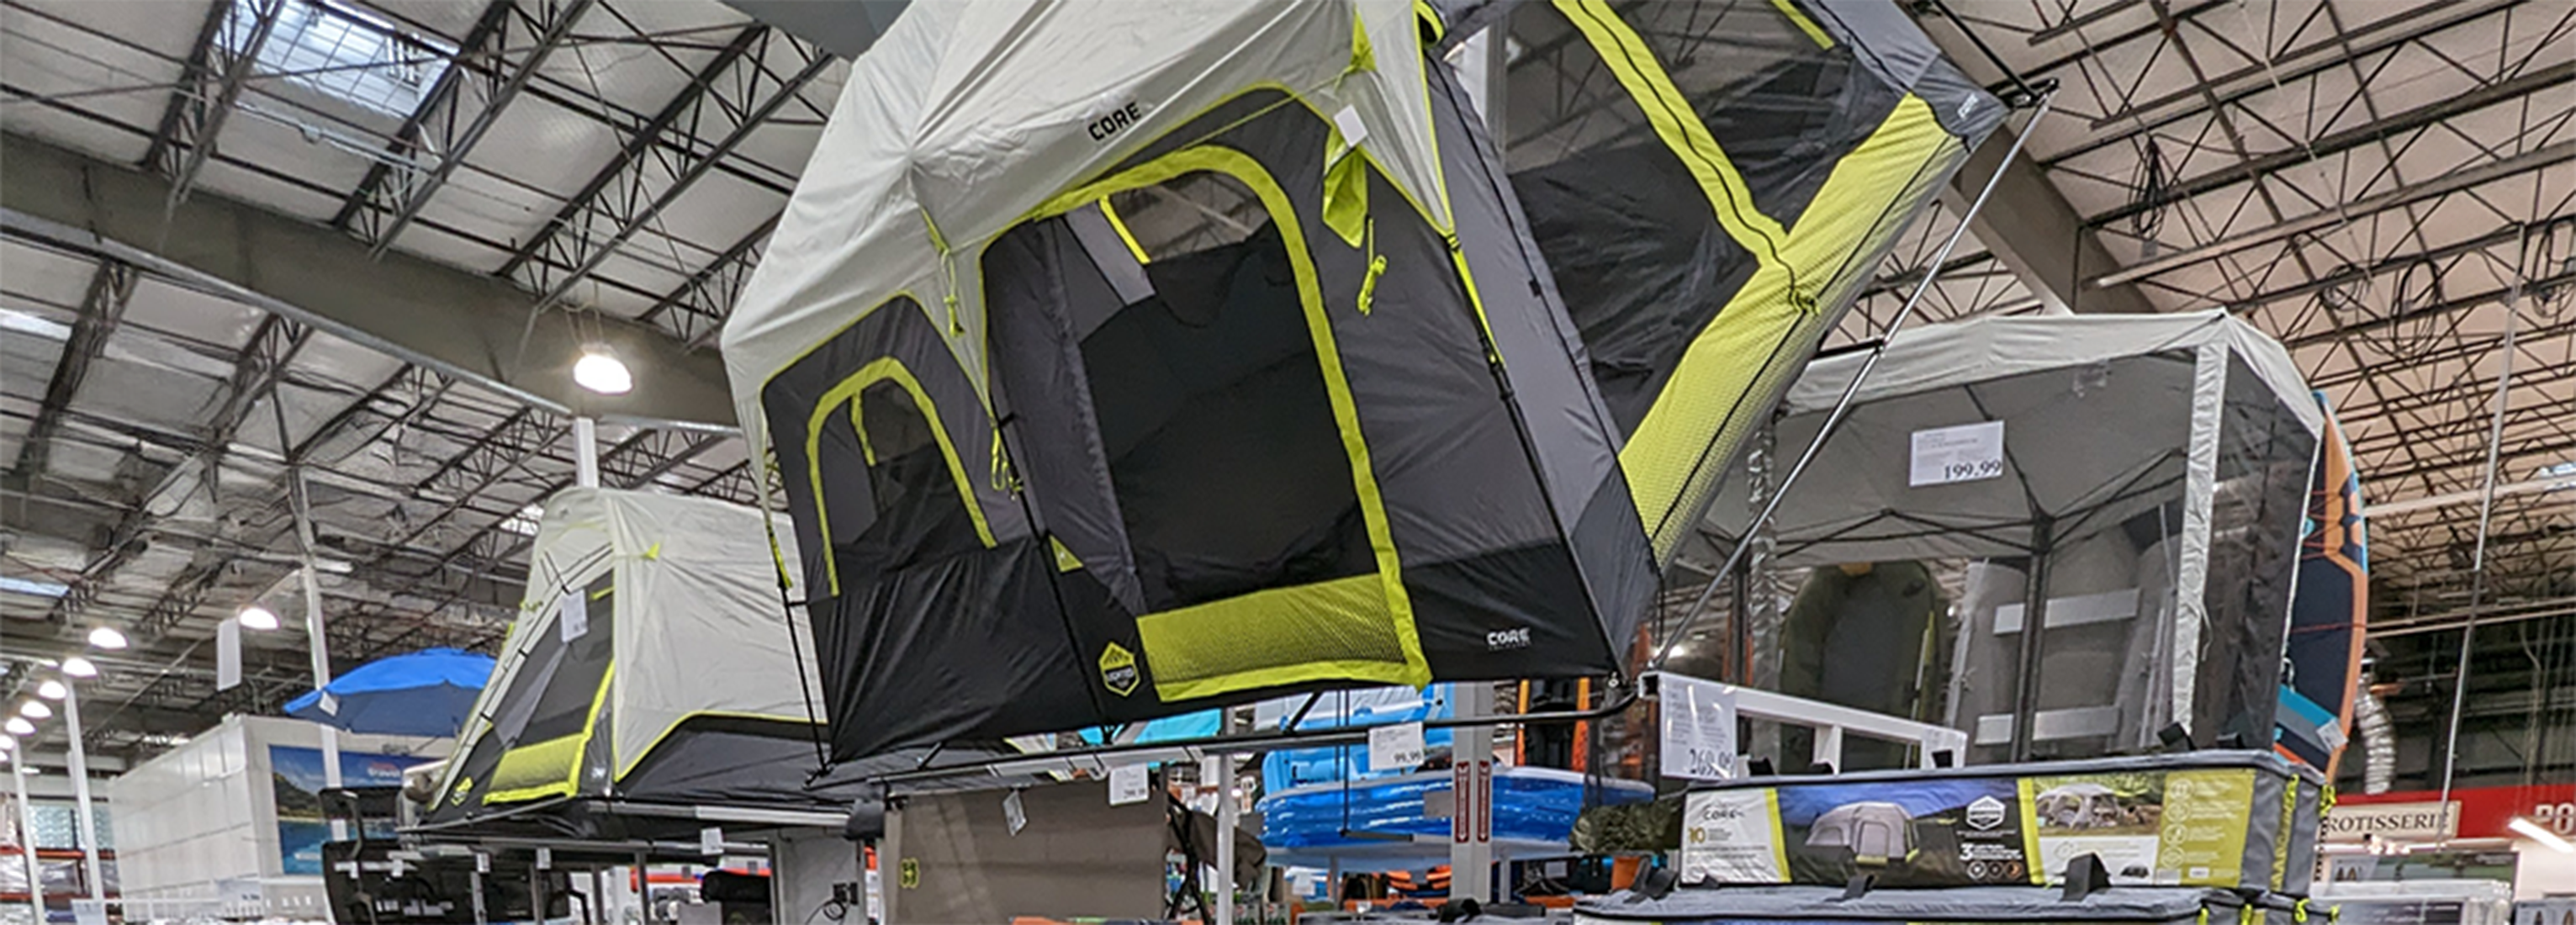 ’24 MAR – Tent Display